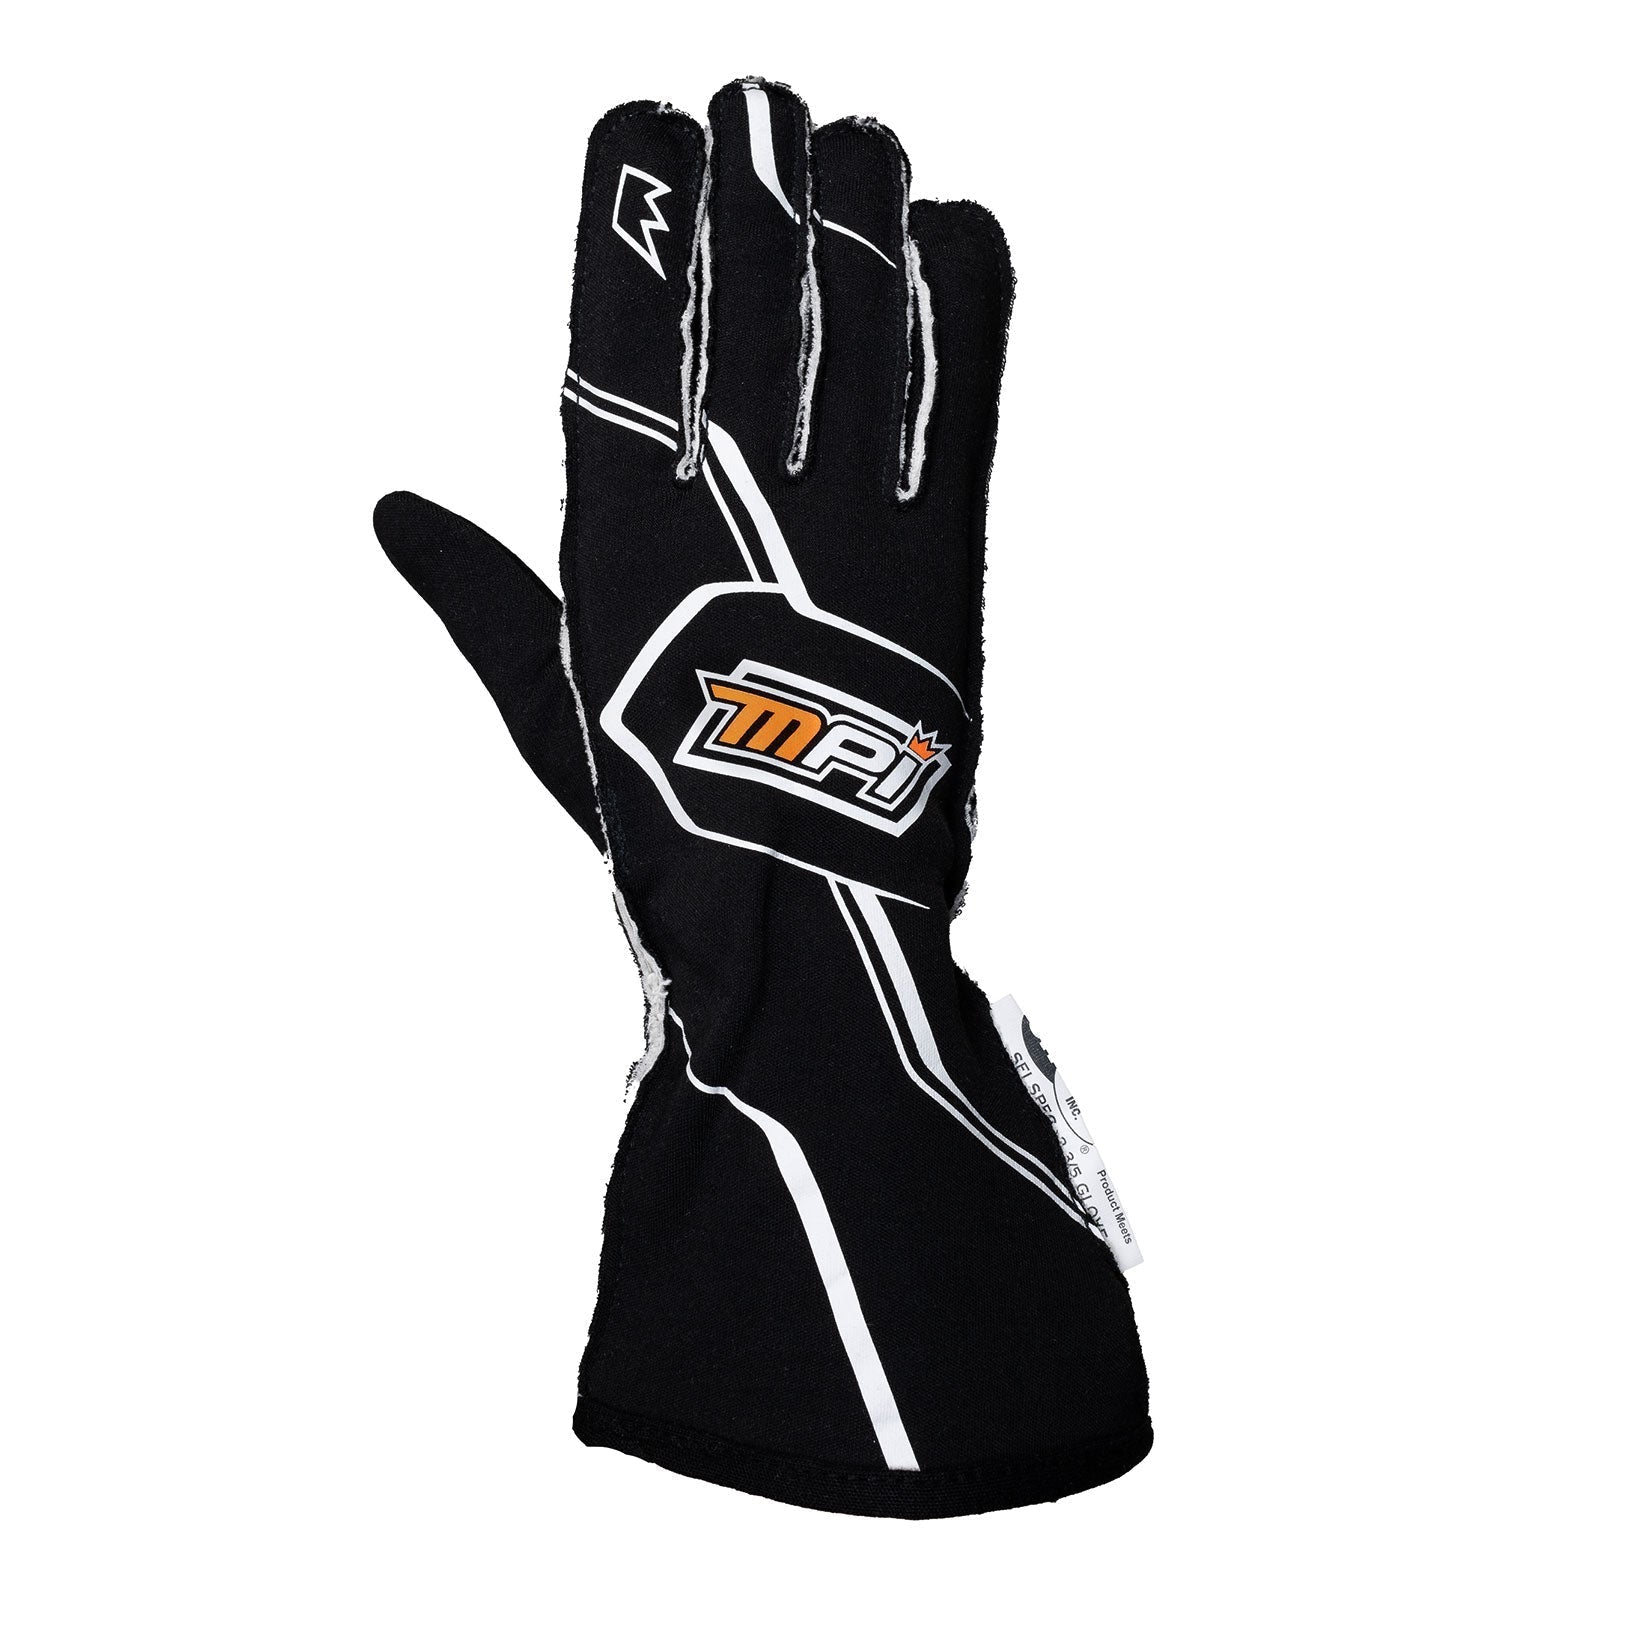 Max Papis Innovations Racing Gloves Black XXL MPI display